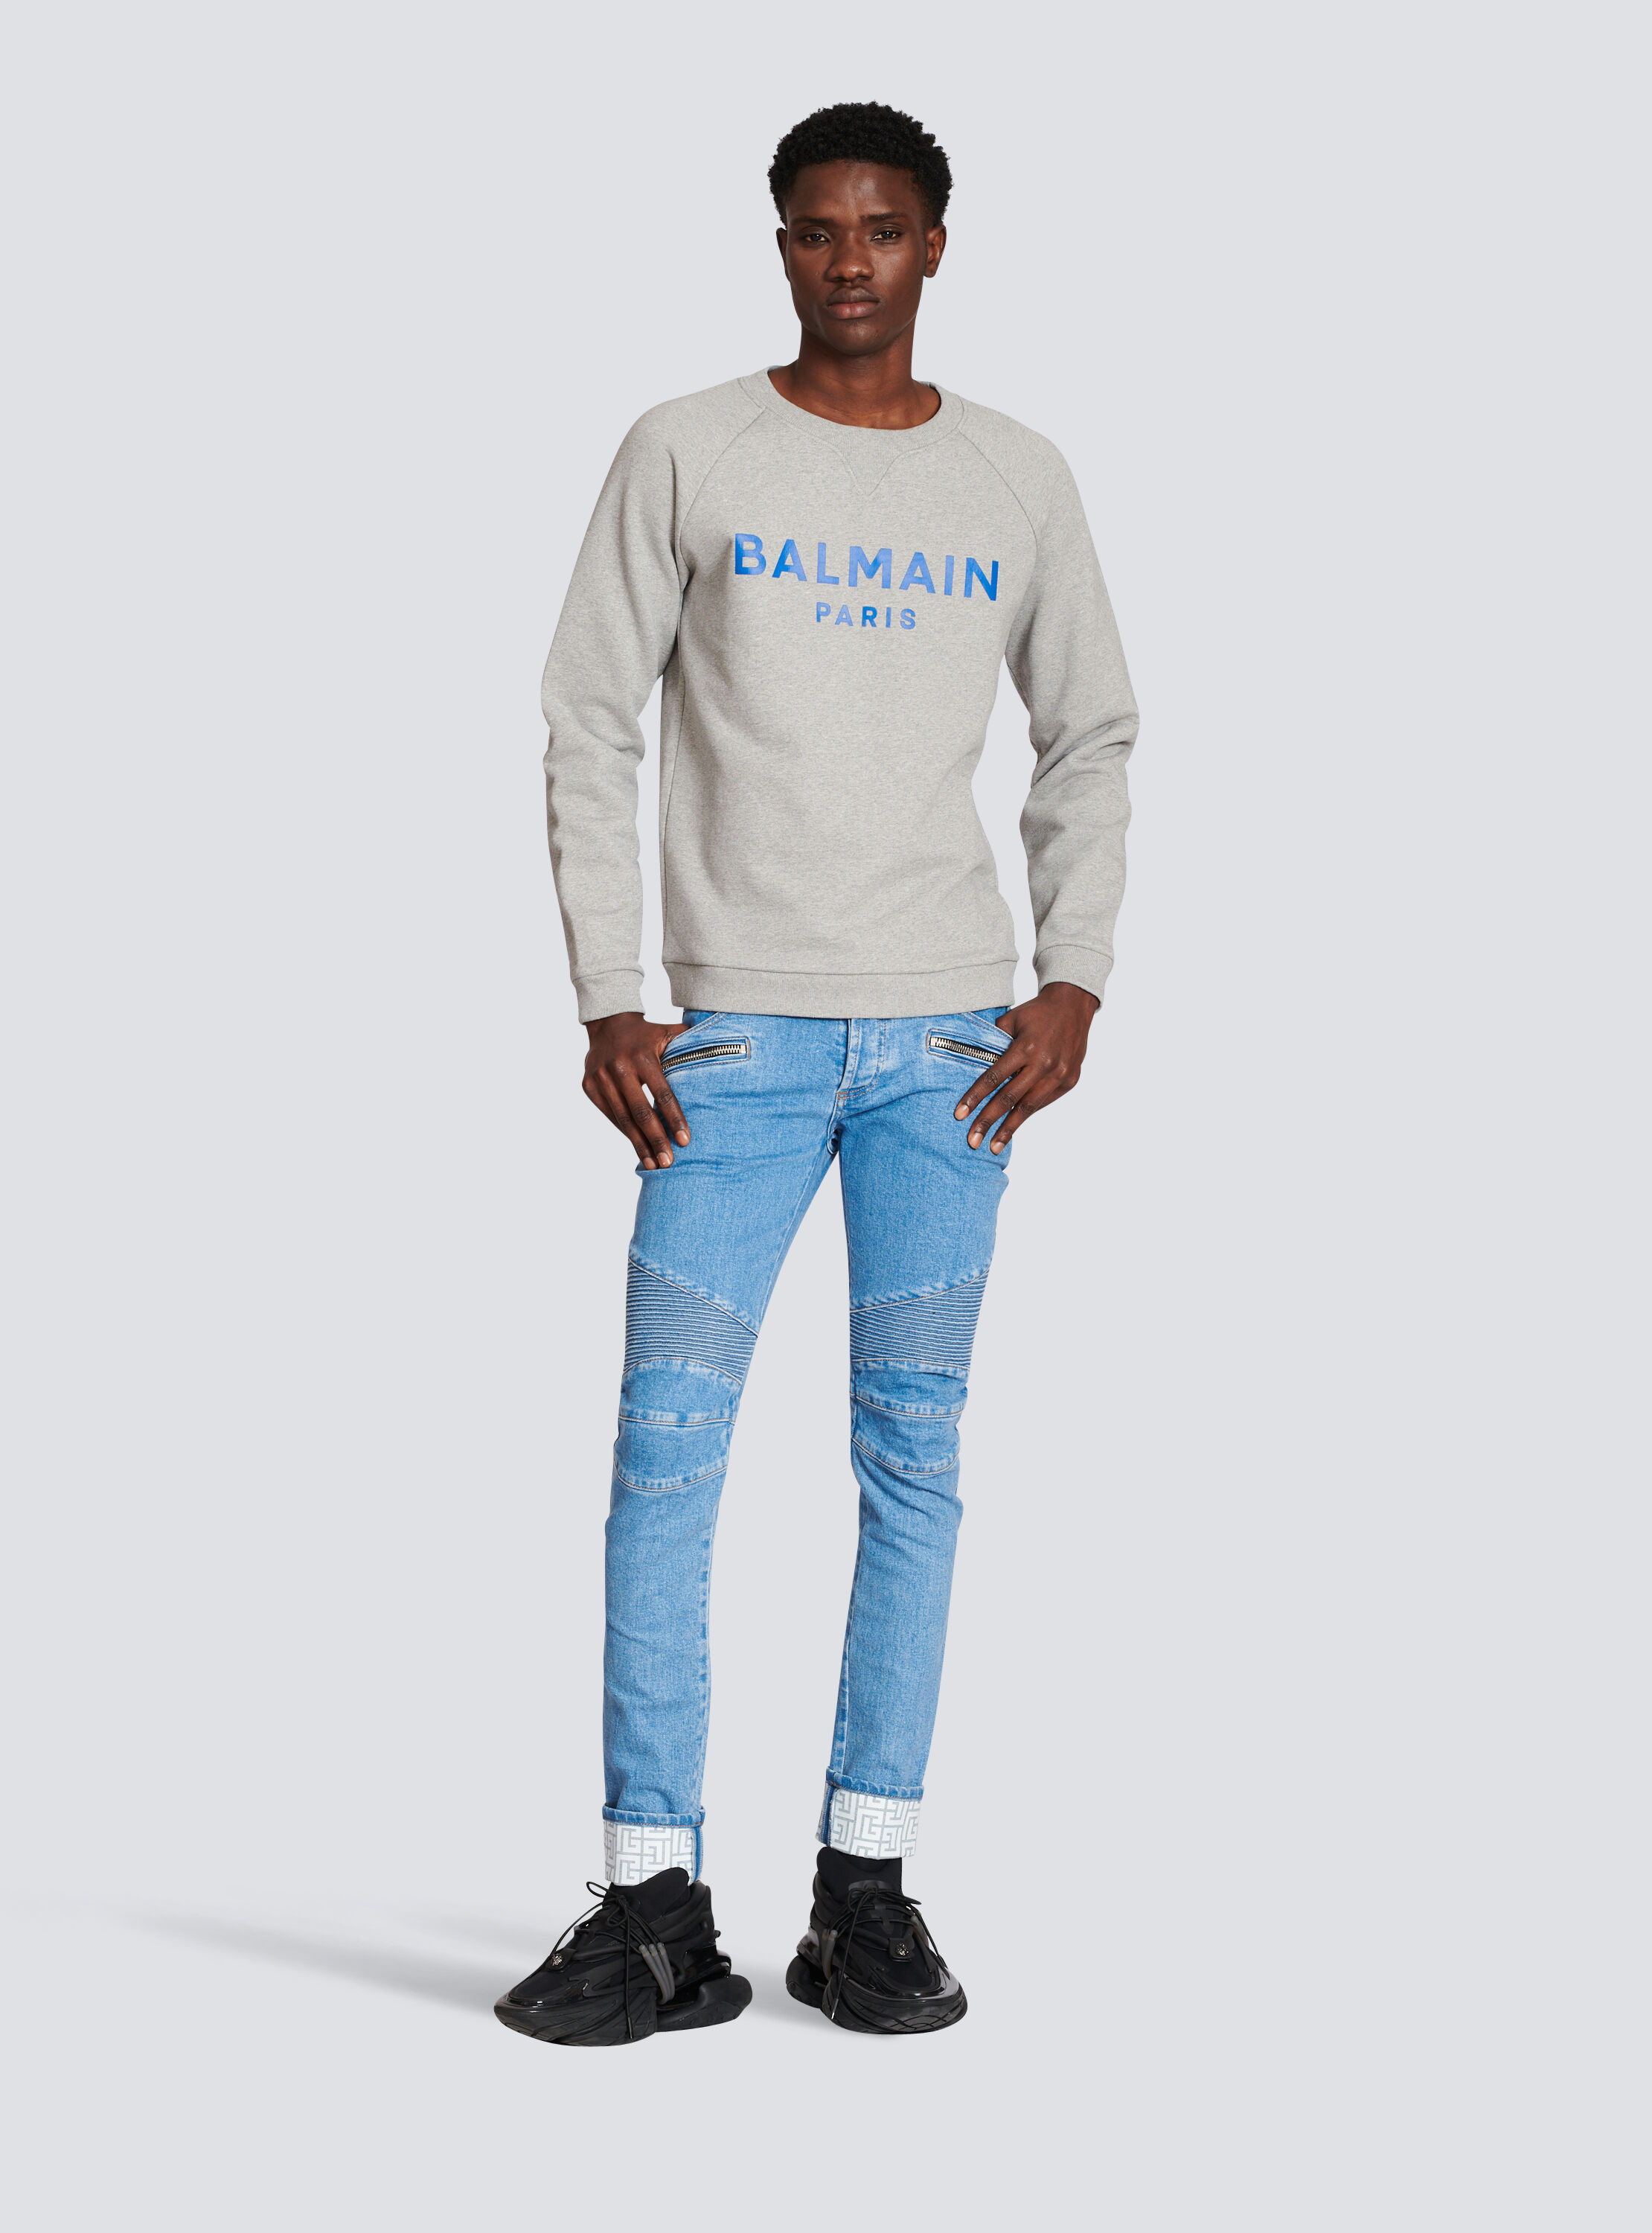 Cotton sweatshirt with Balmain Paris logo print - Men | BALMAIN